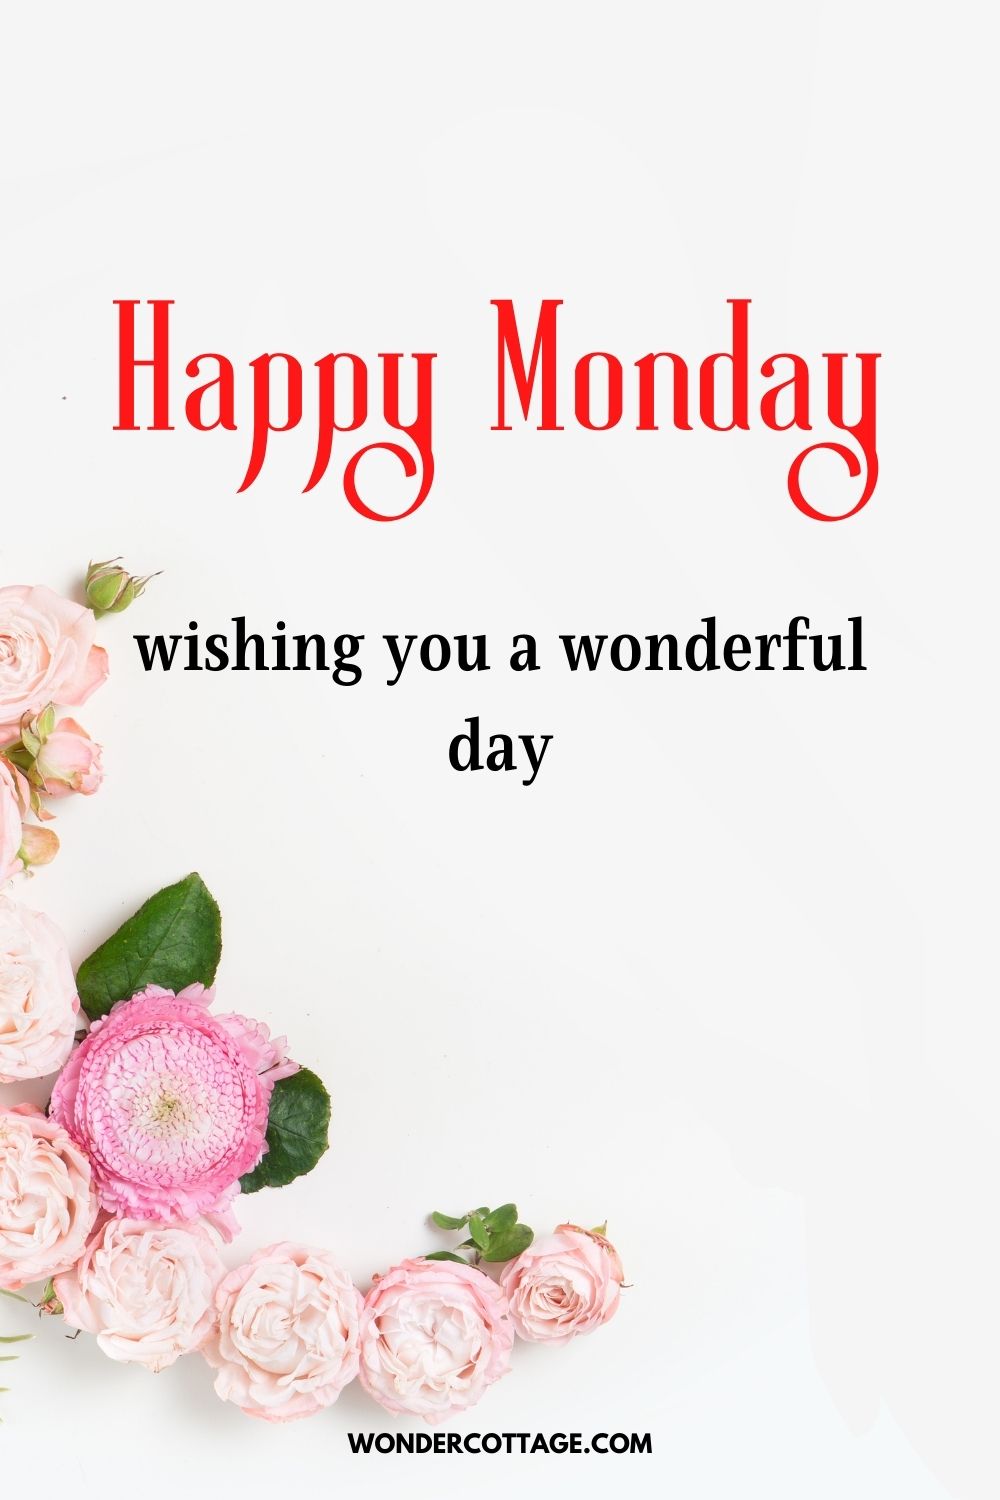 Happy Monday, wishing you a wonderful day